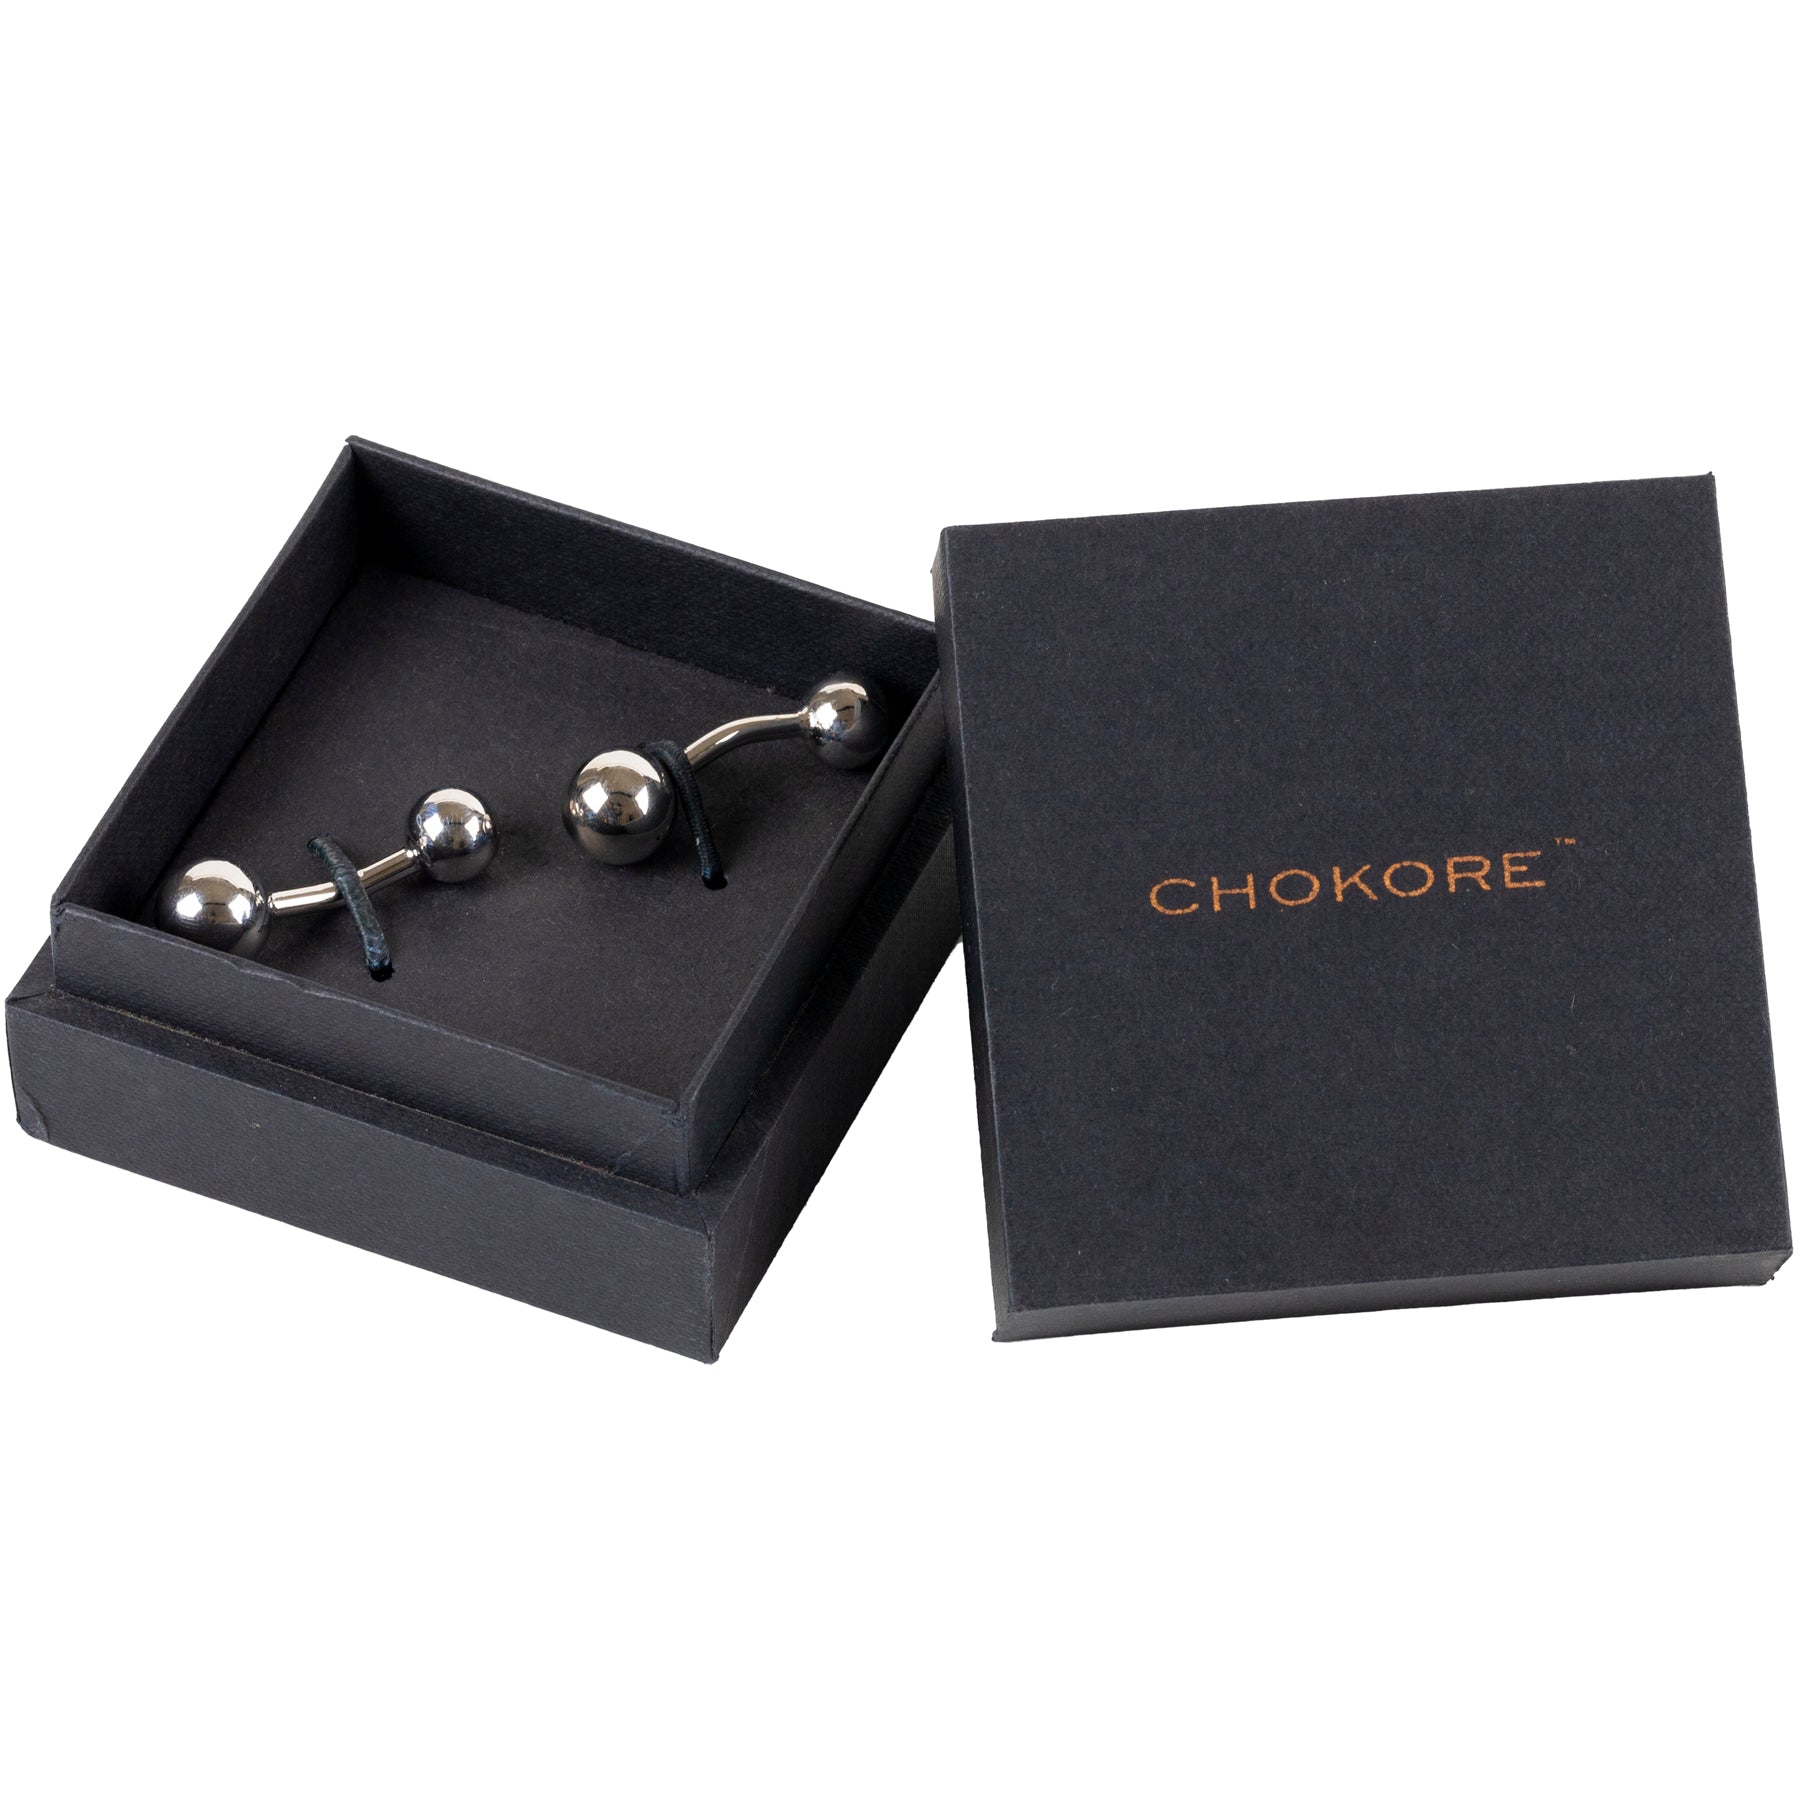 Chokore Silver Round Shaped Premium Range of Cufflinks